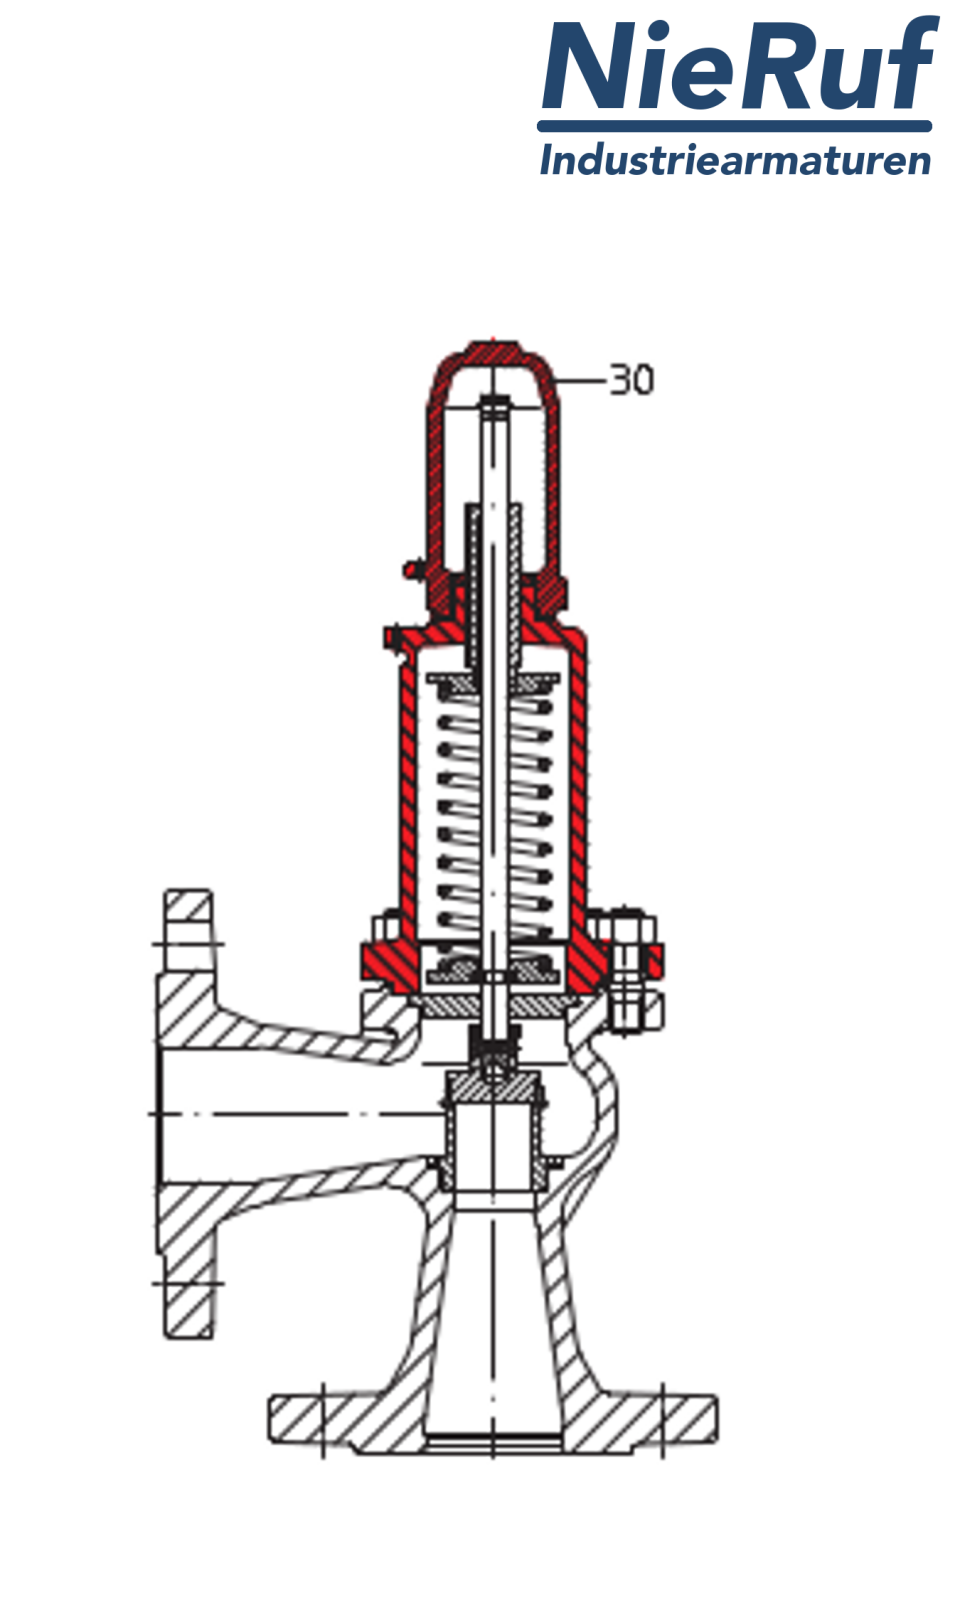 flange-safety valve DN100/DN100 SF0101, cast iron EN-JL1040 metal, without lever